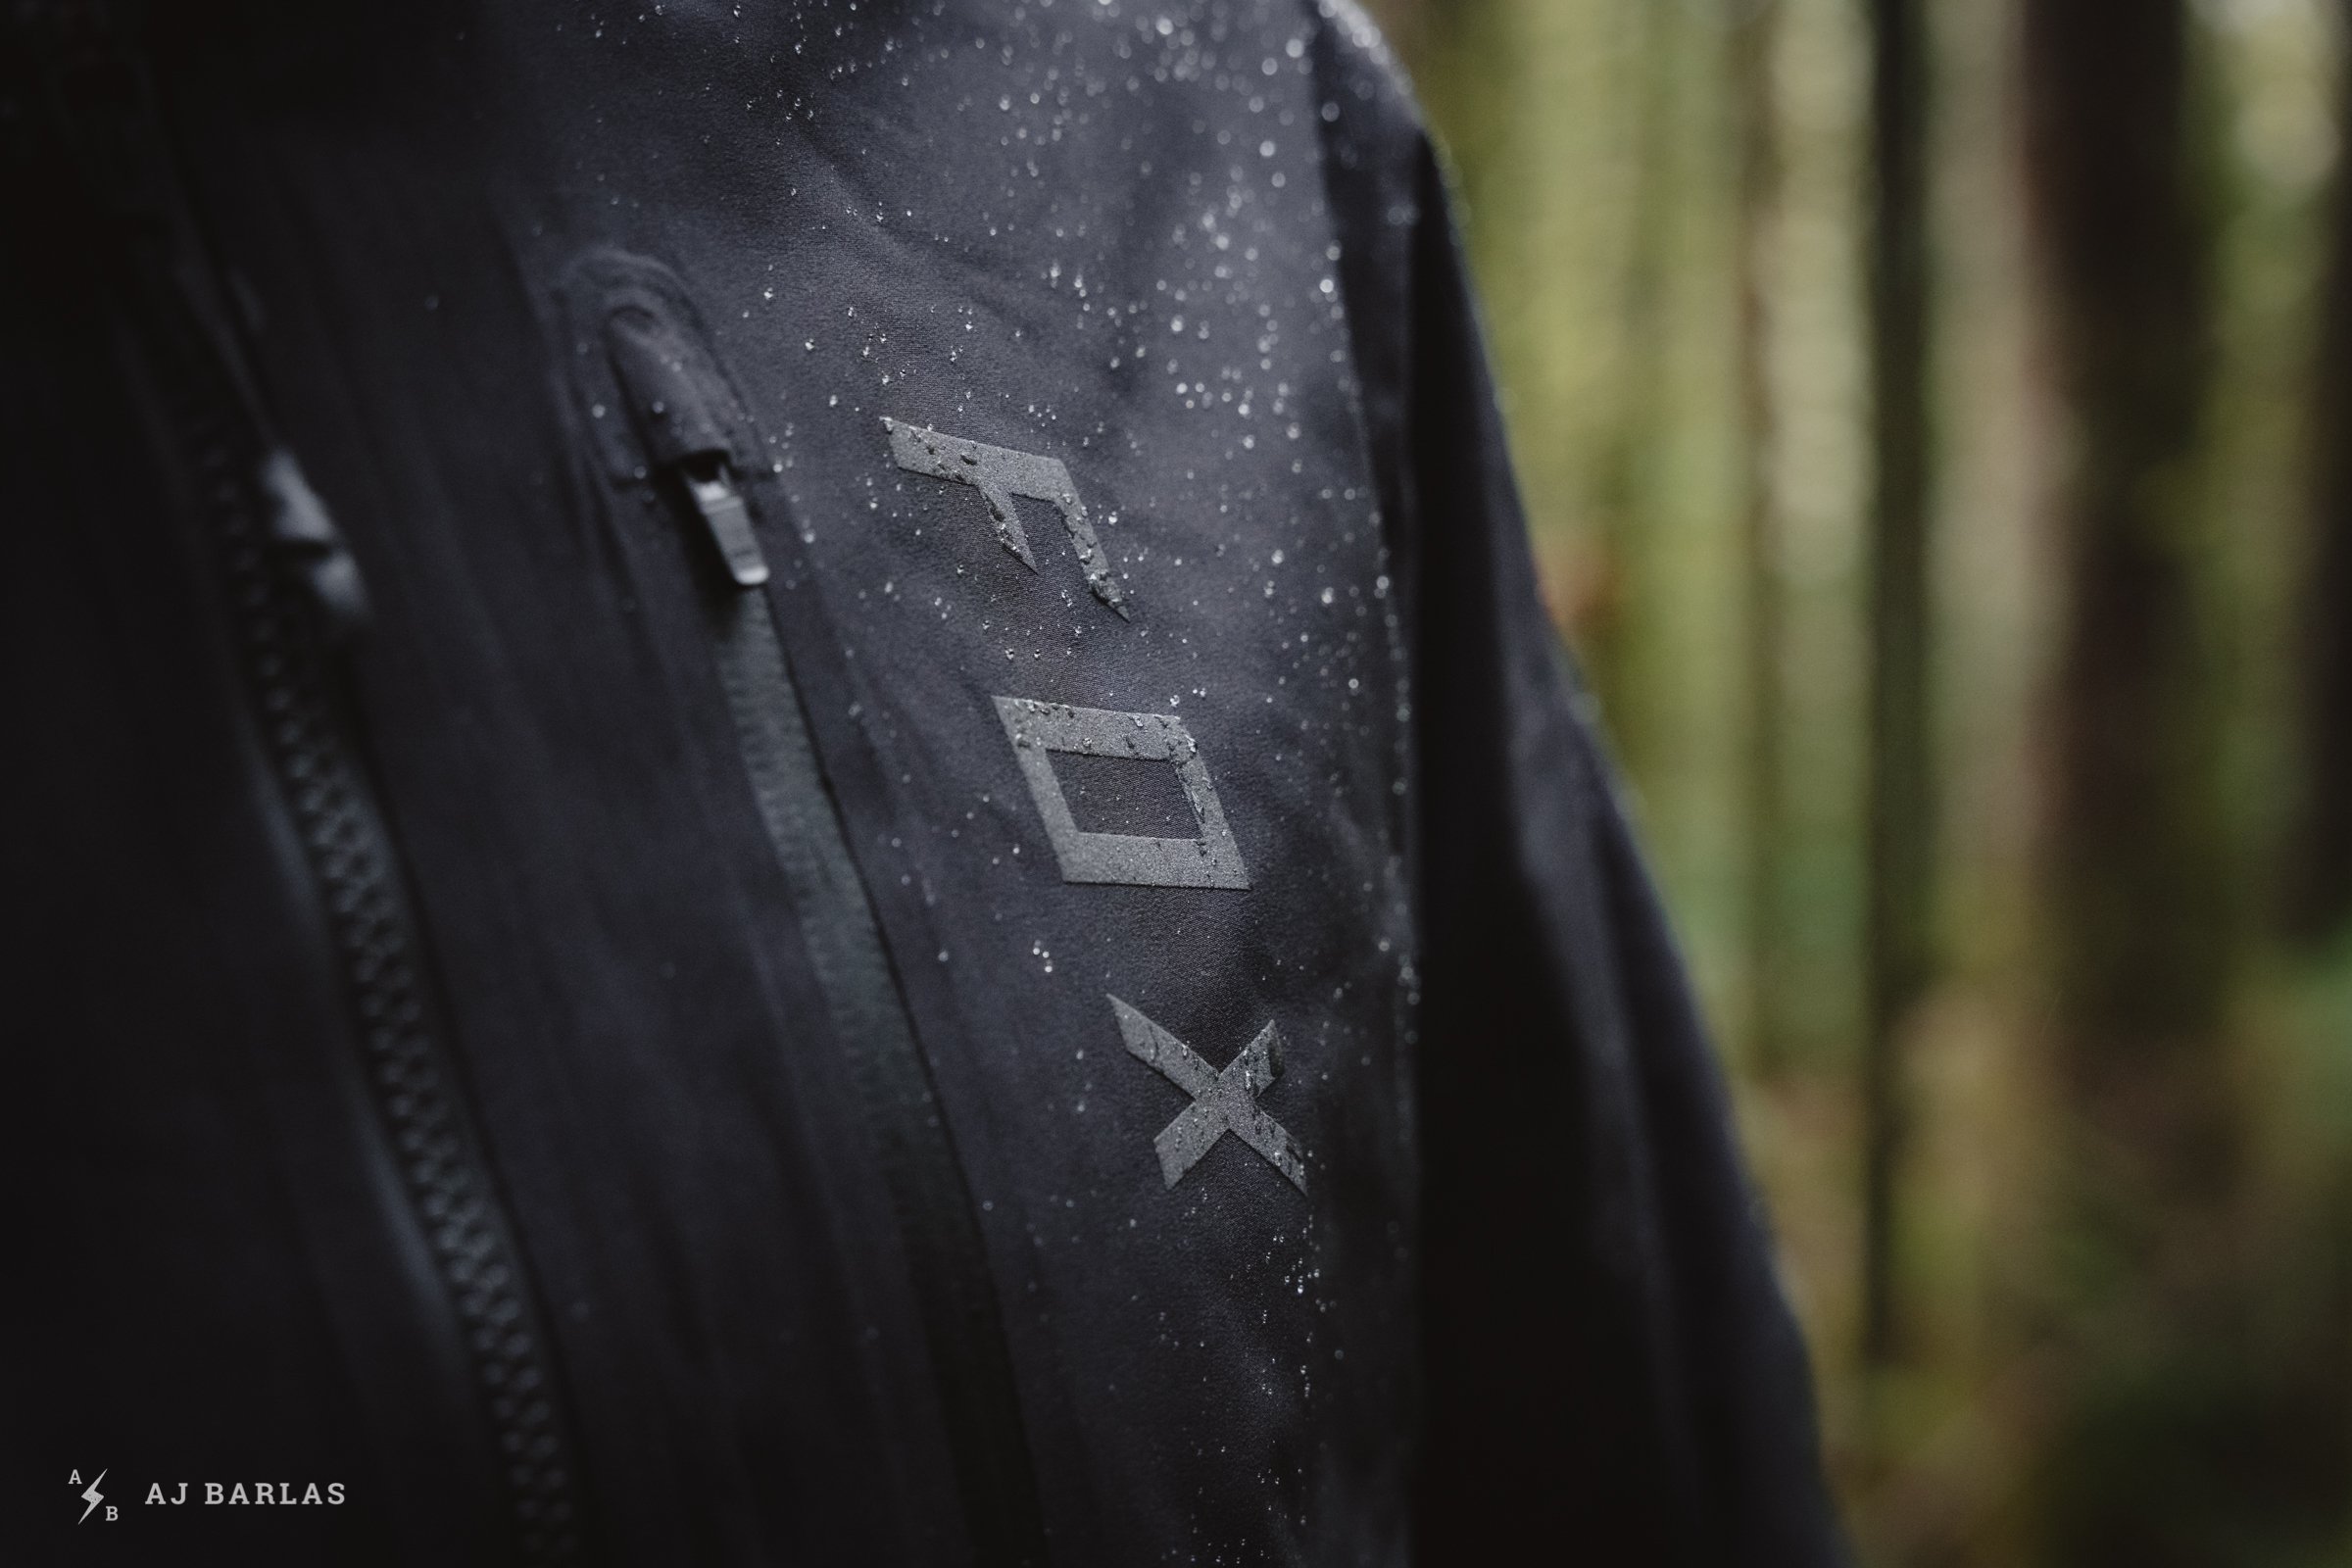 Test de la chaqueta MTB FOX Flexair Neoshell® Water